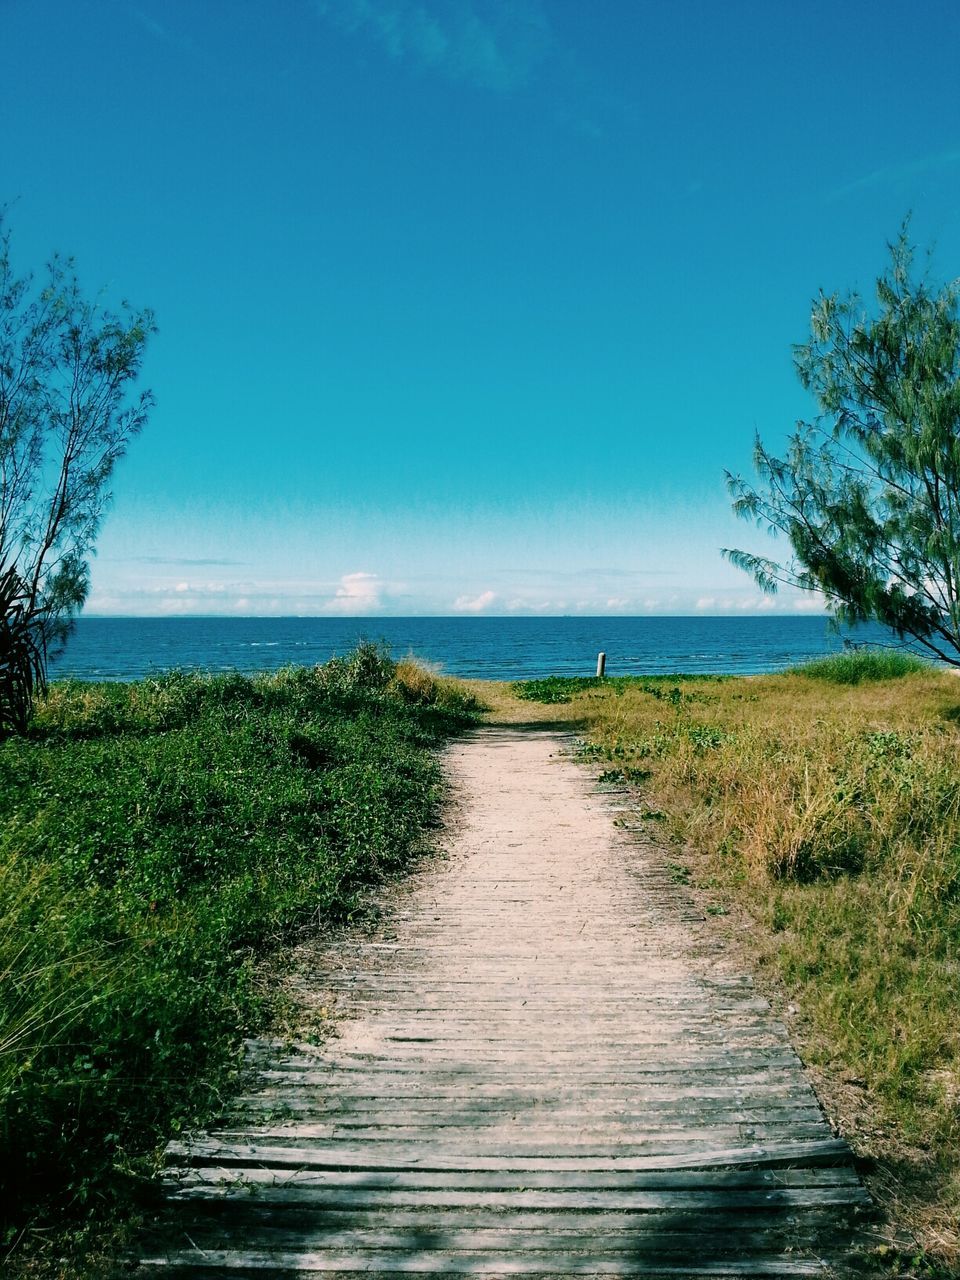 Boardwalk amidst grassy field leading towards sea against blue sky